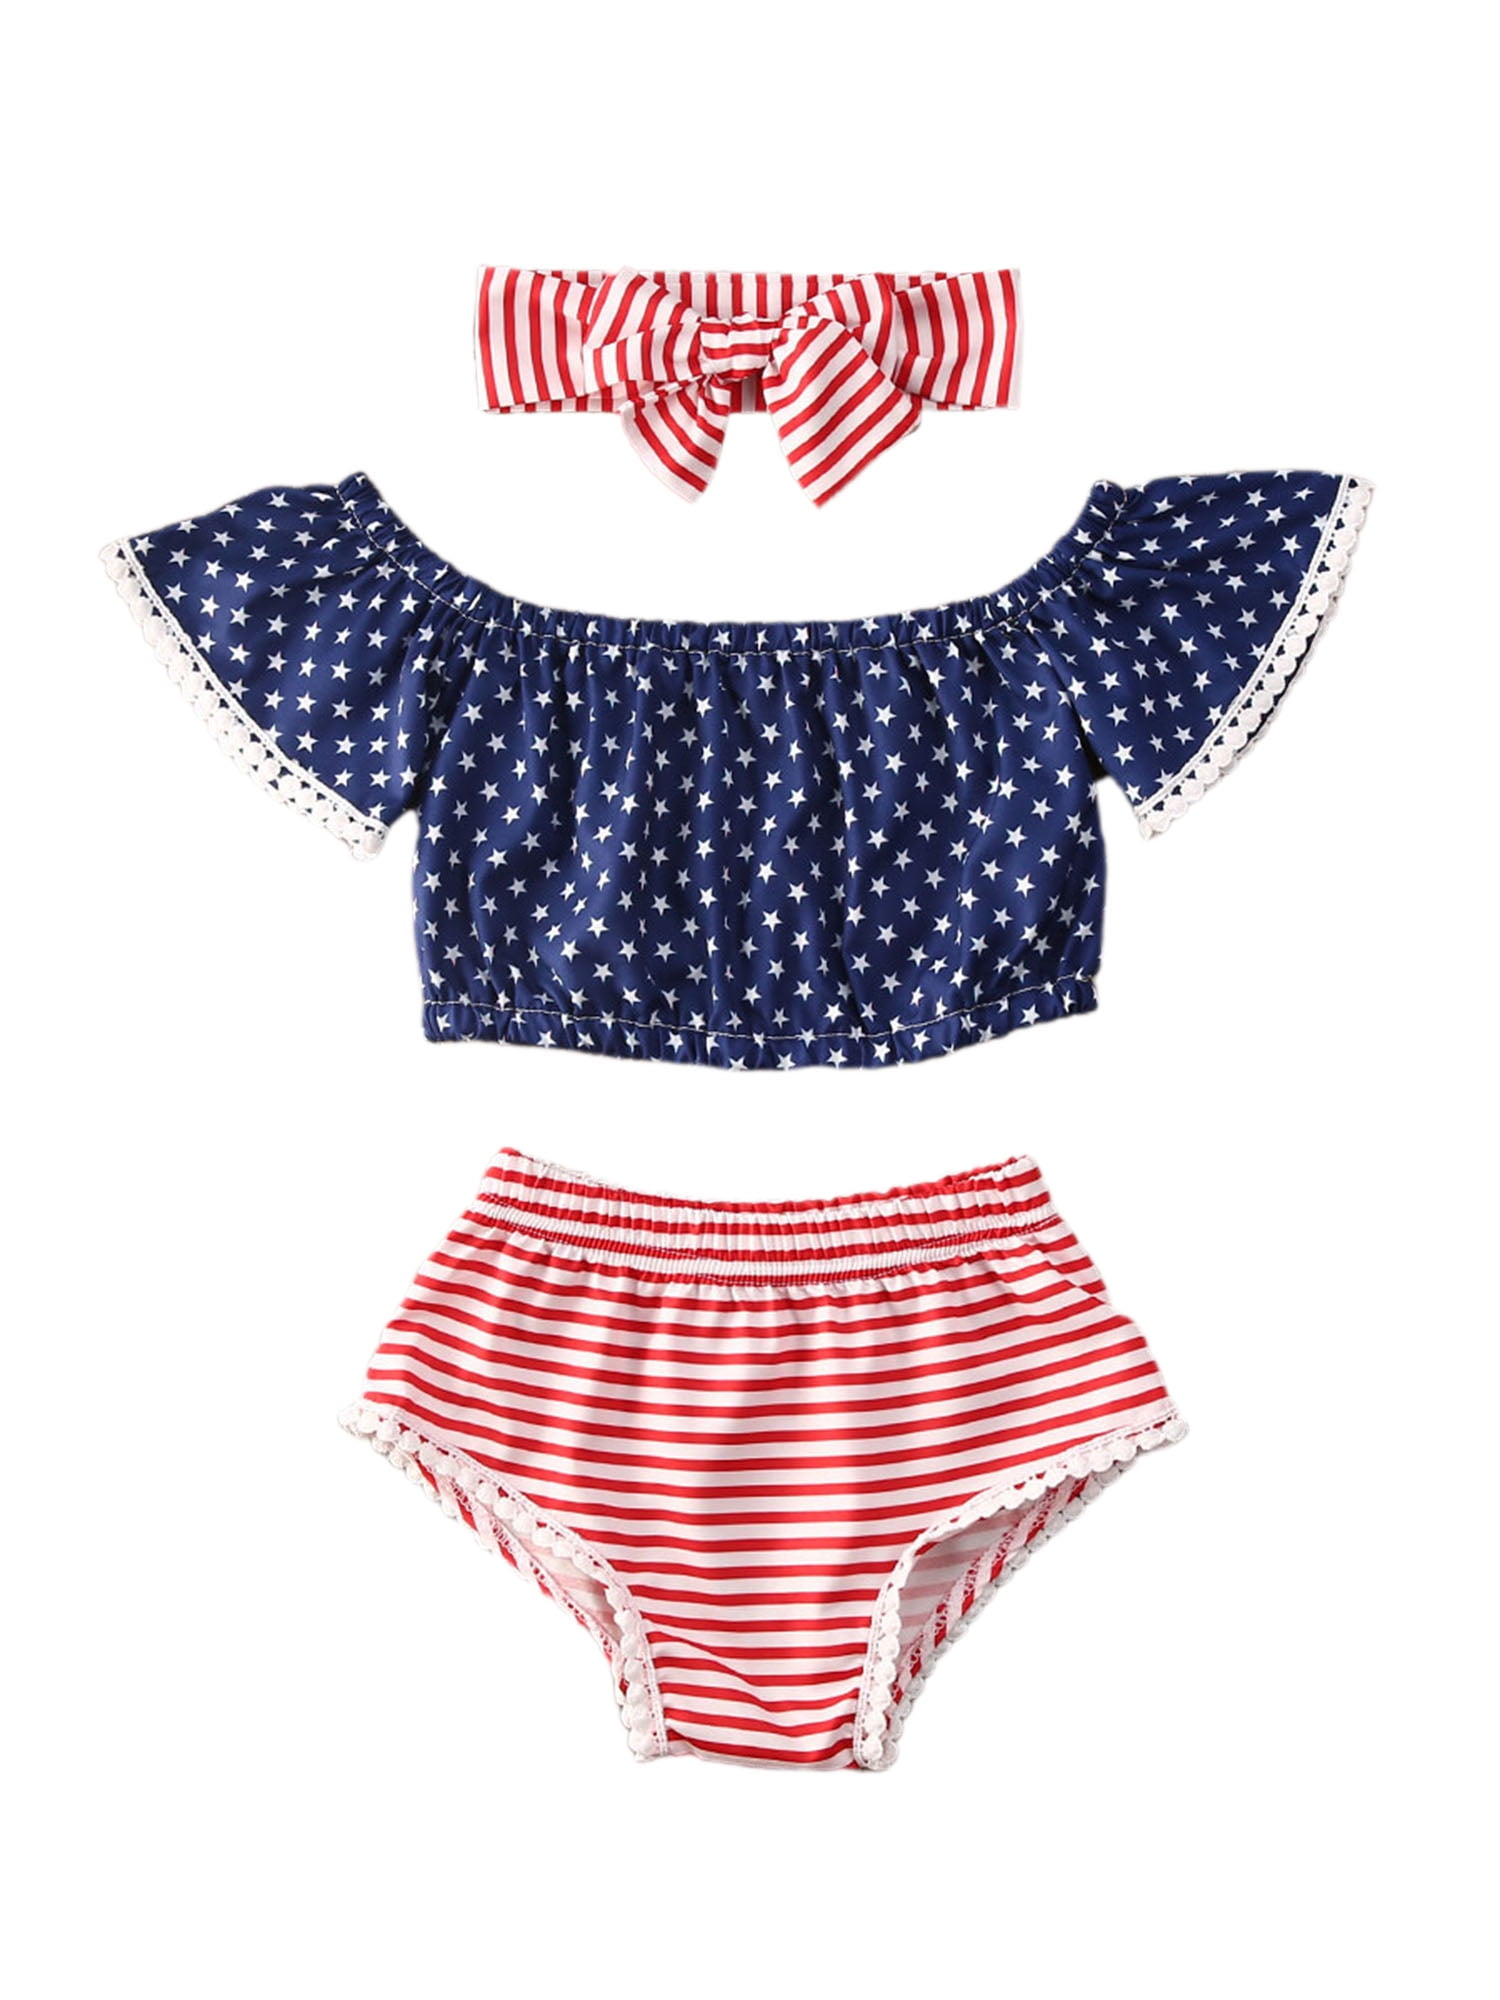 Efaster Newborn Baby Girls 4th of July Sleeveless Striped Tops+Stars Shorts Set 